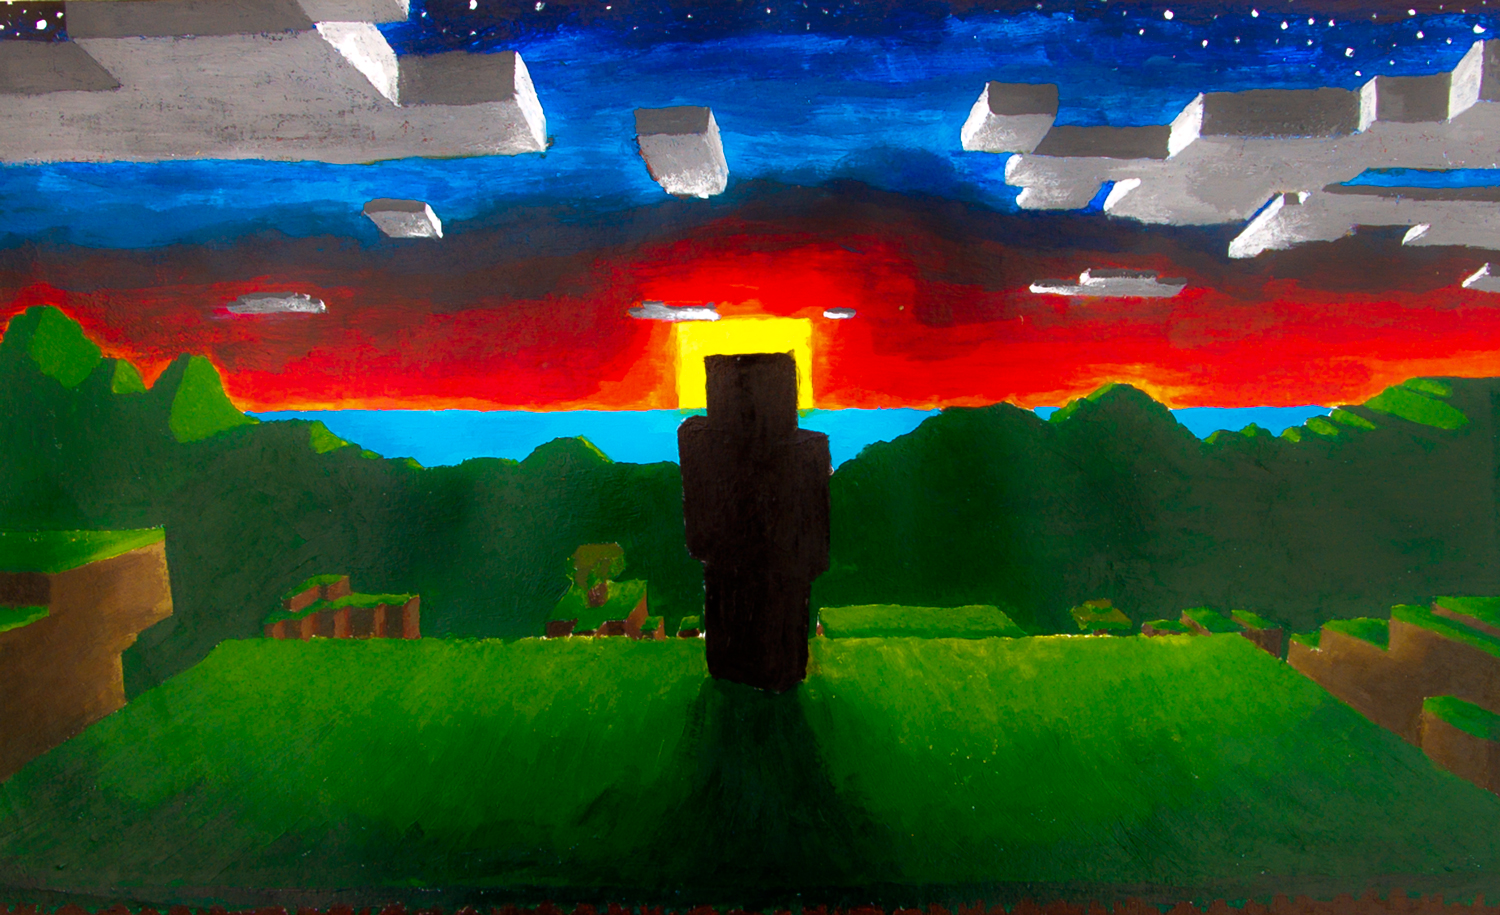 Minecraft at Sunset by CameronMcManus on DeviantArt